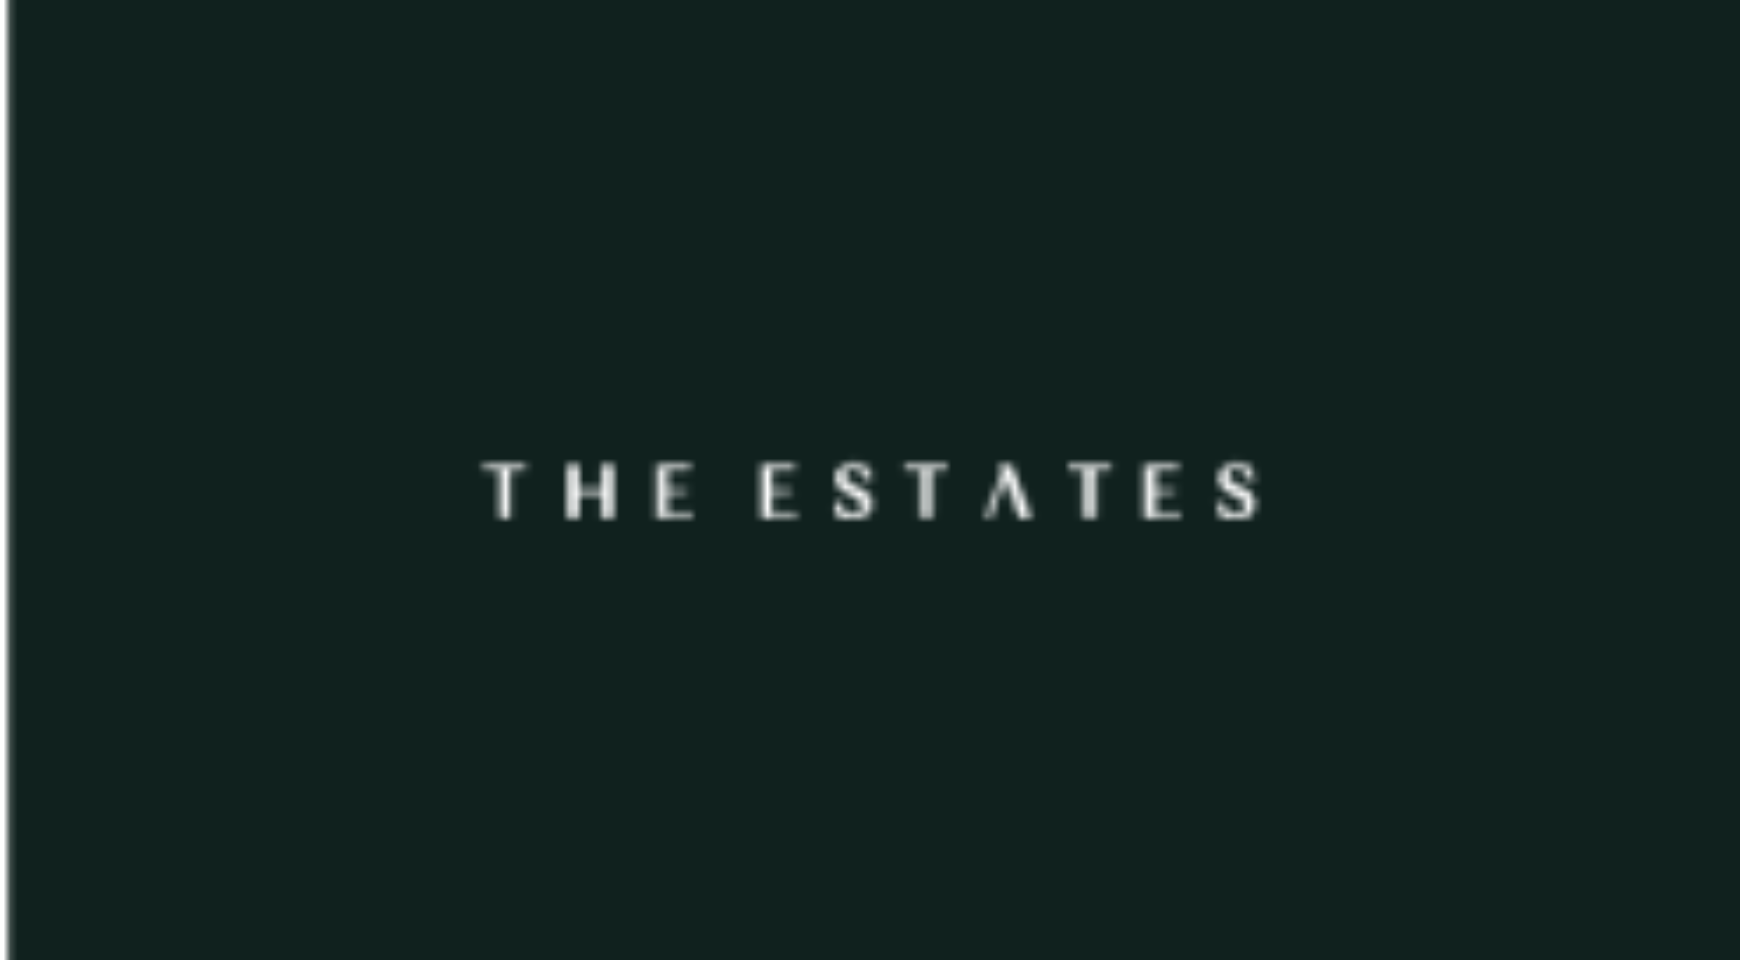 The Estates Sodic - The Property EG